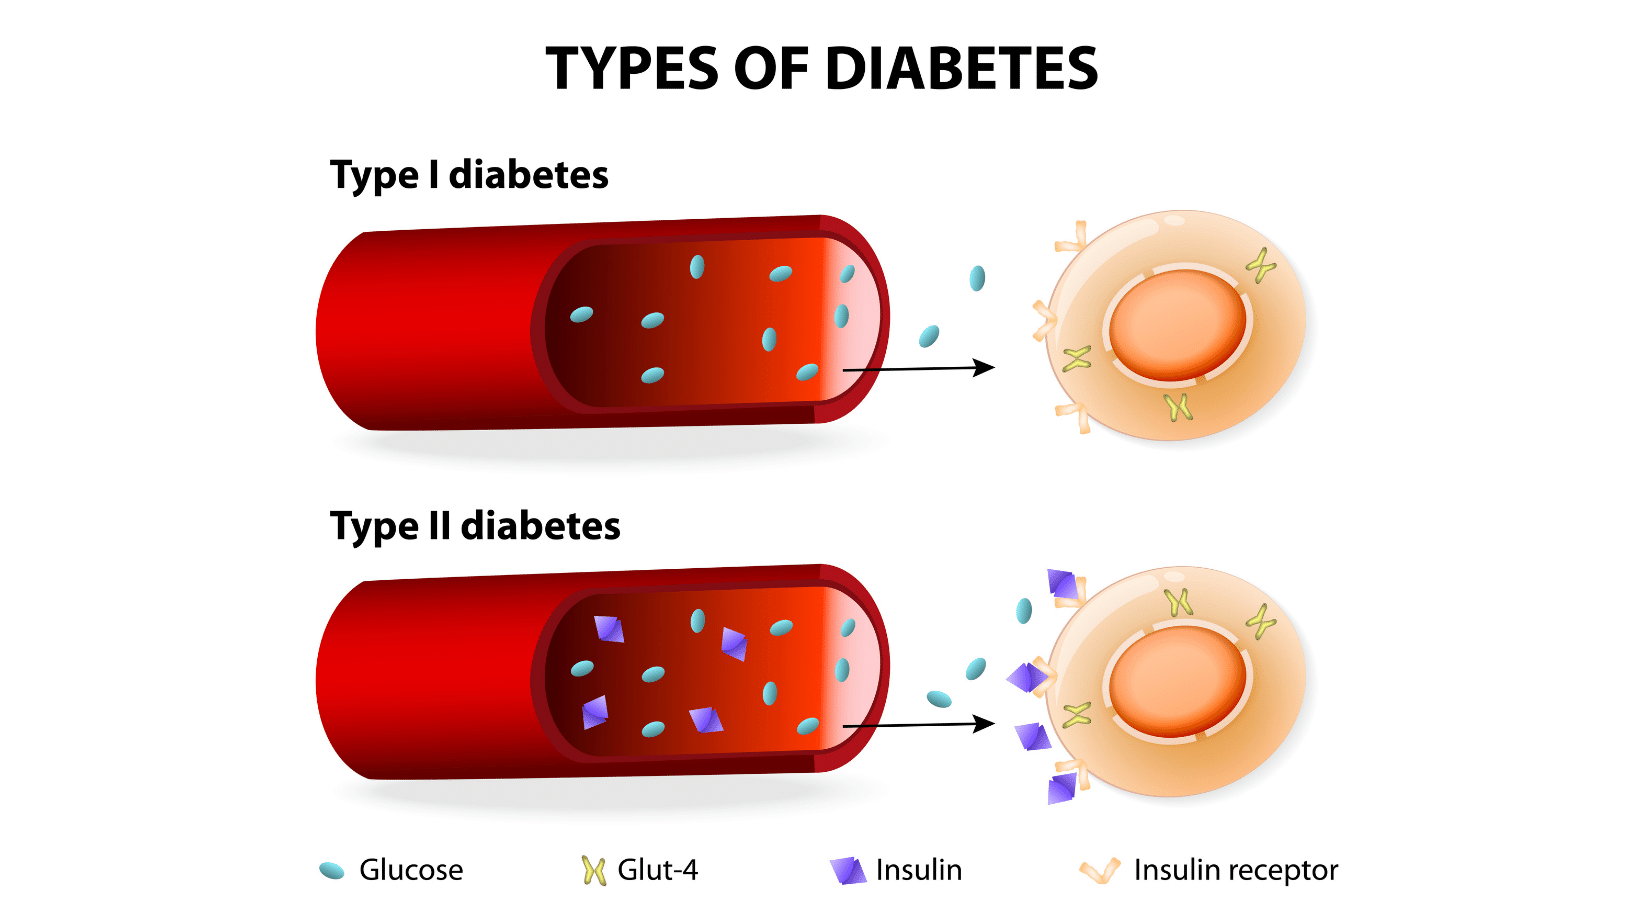 Types of diabetes